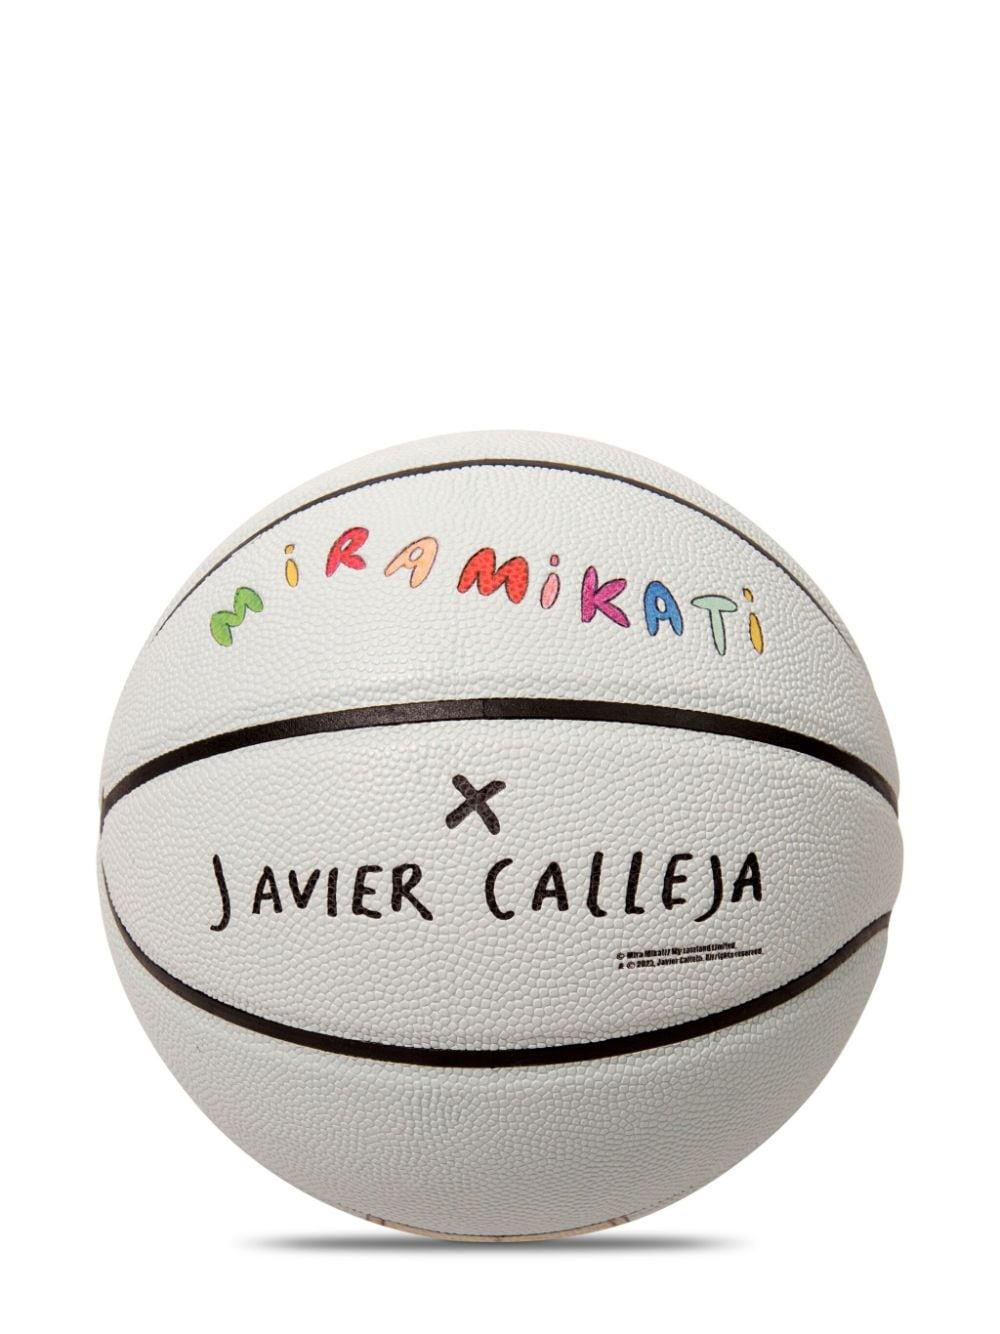 Mira Mikati x Javier Calleja Let's Talk basket ball - White